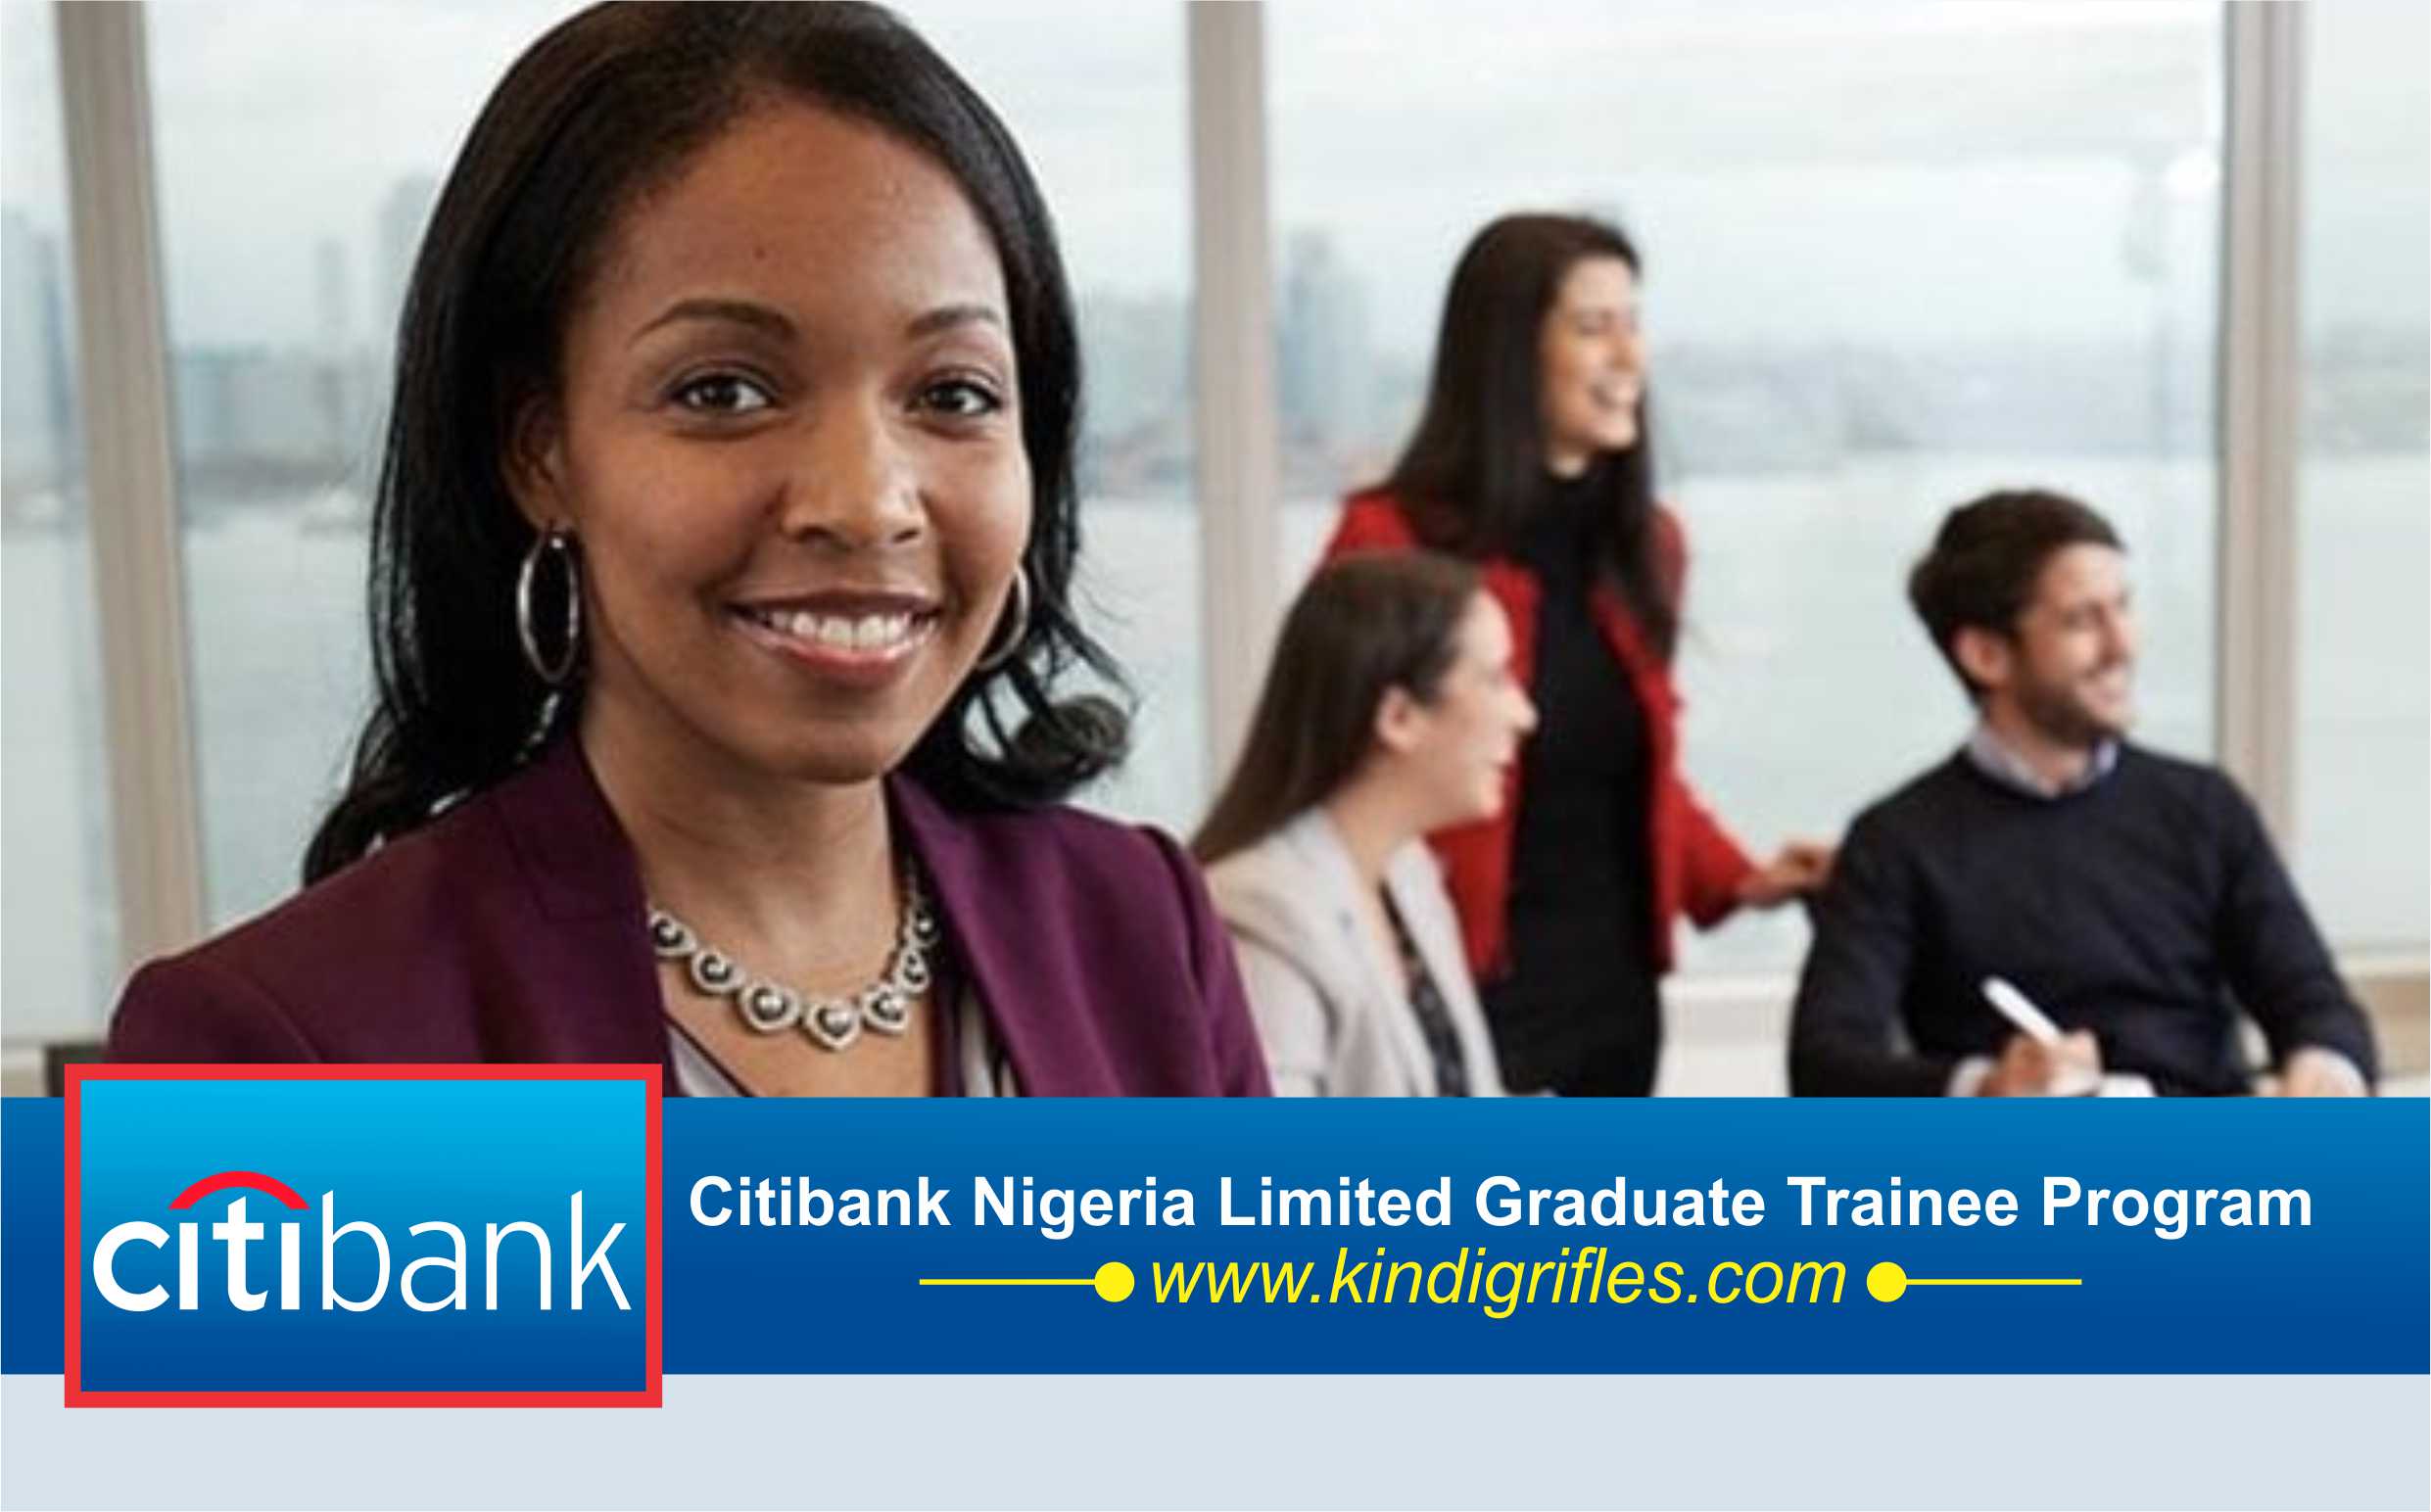 Citibank Nigeria Limited Graduate Trainee Program